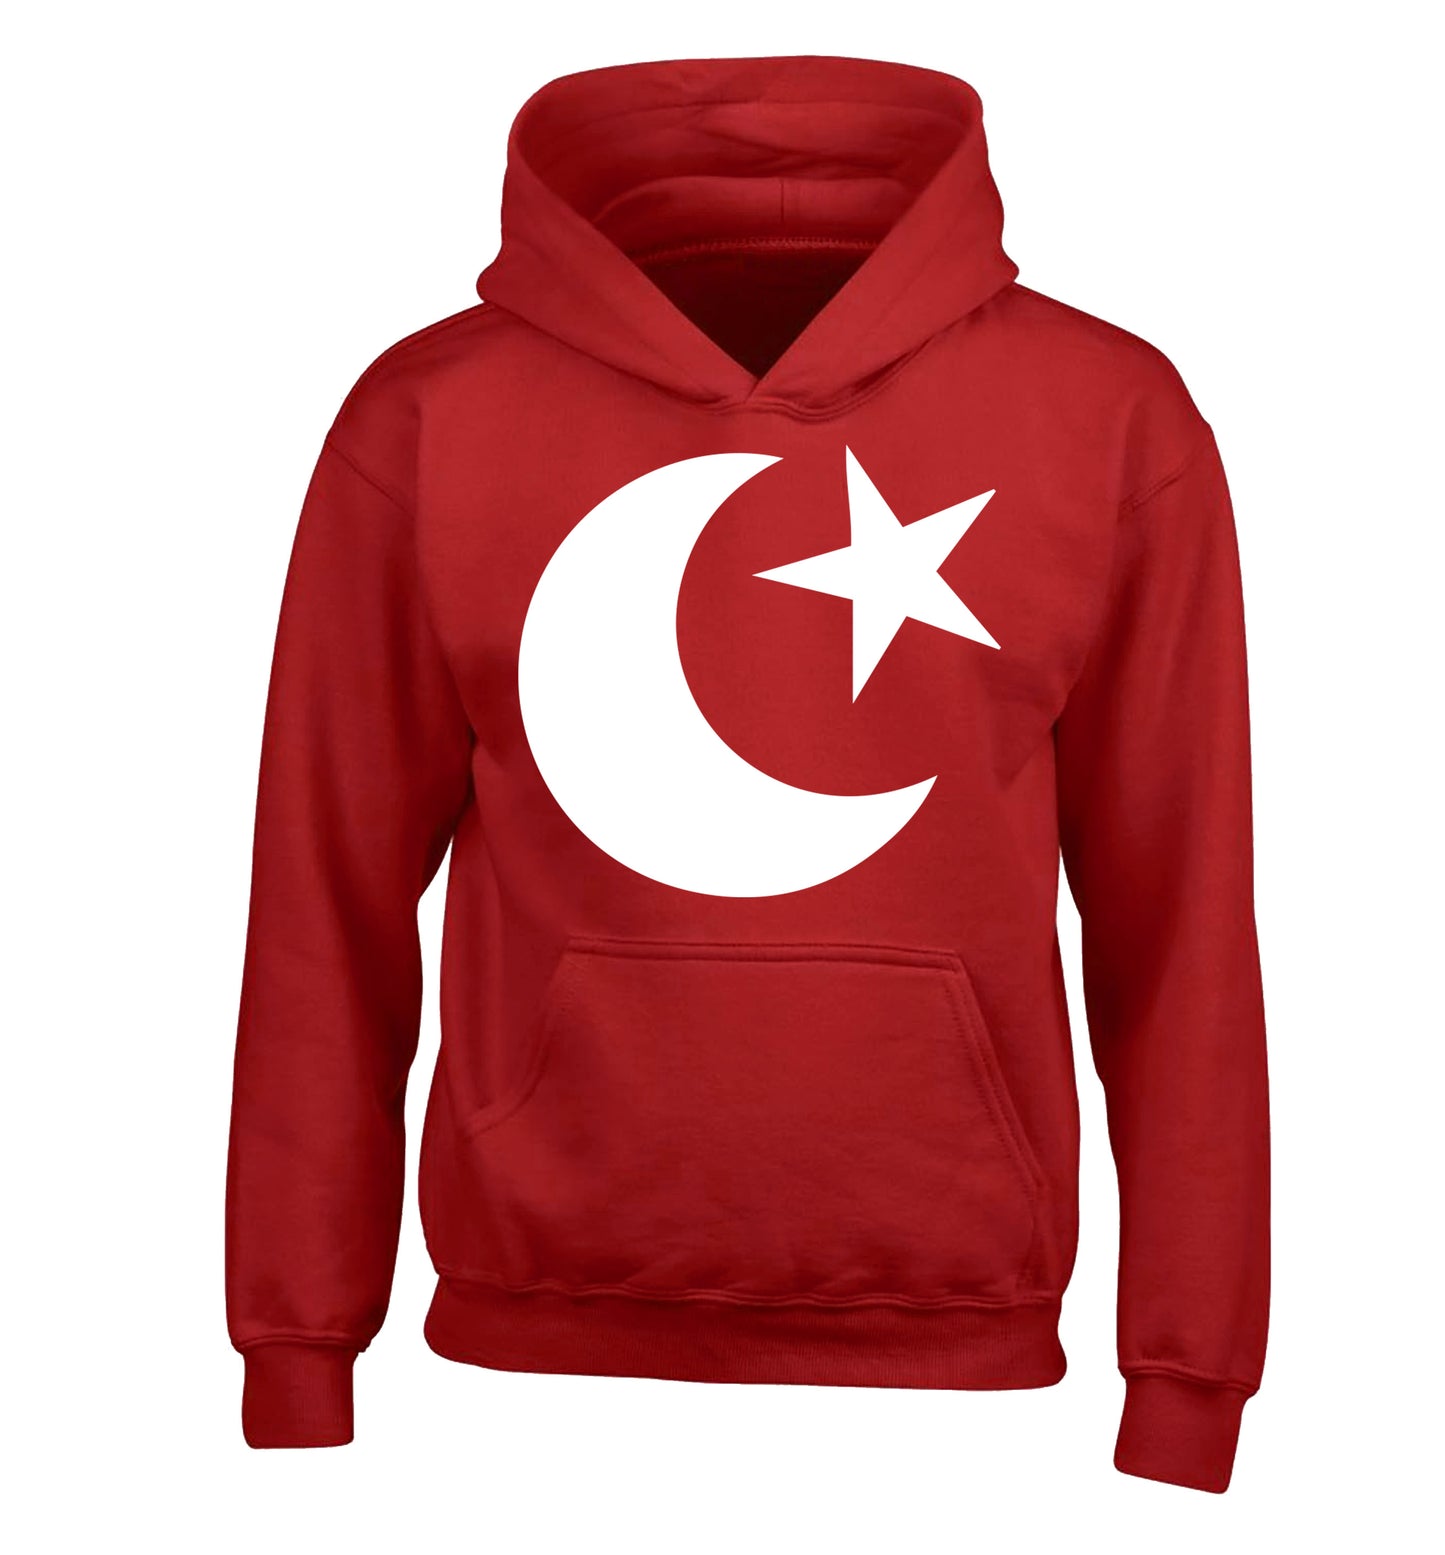 Eid symbol children's red hoodie 12-13 Years